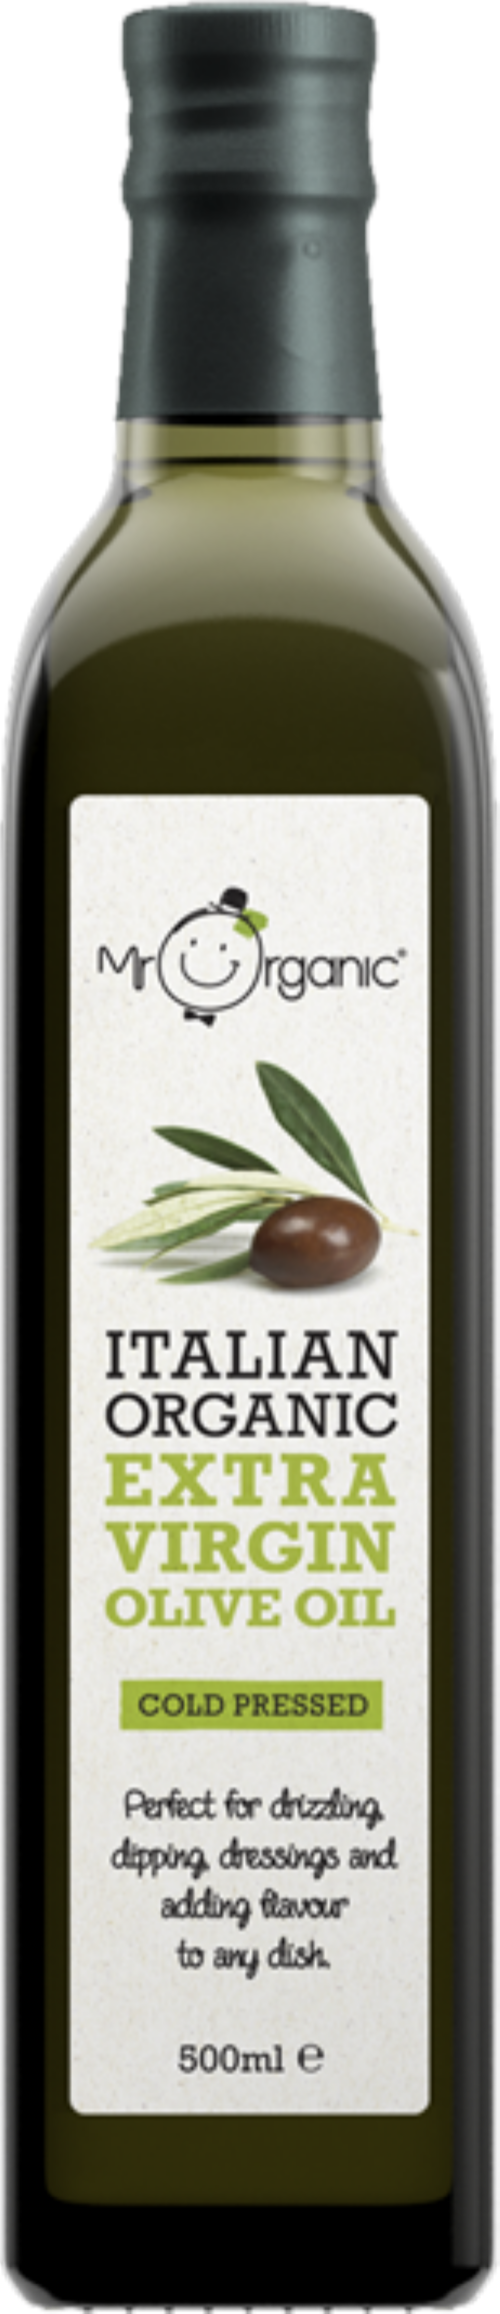 MR ORGANIC Organic Italian Extra Virgin Olive Oil 500ml